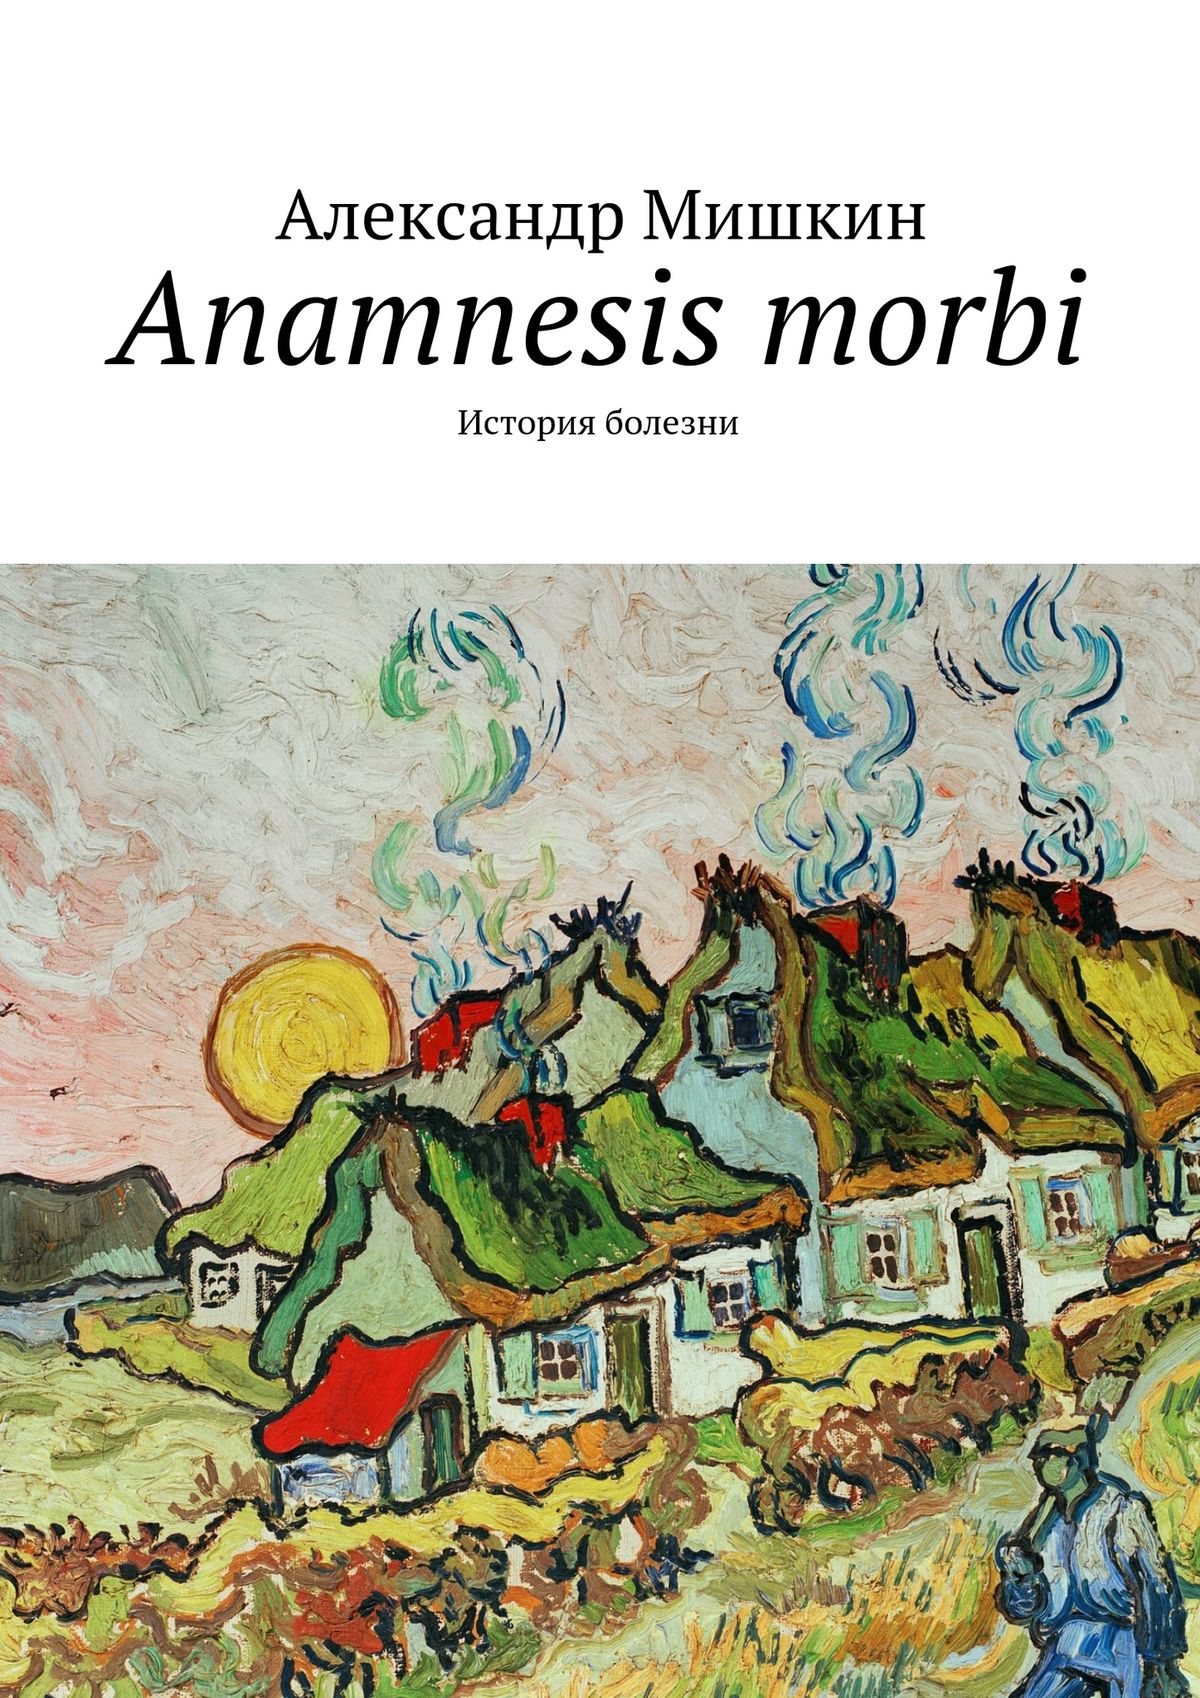 Anamnesis morbi.История болезни